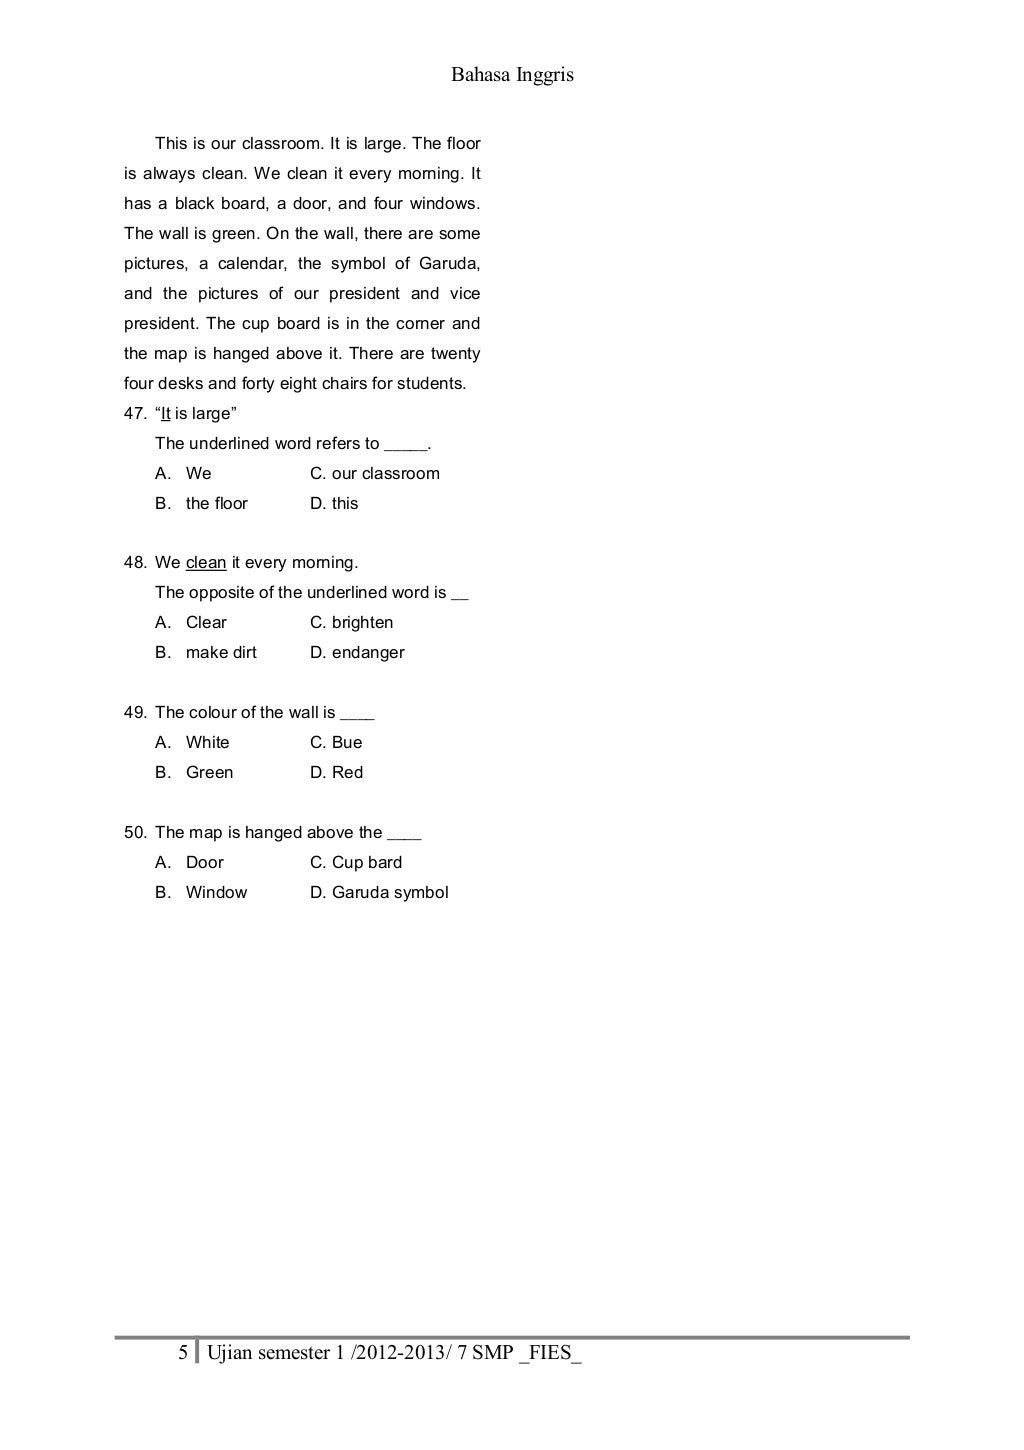 Soal ujian bahasa inggris semester 1 2012 2013 (7 smp)